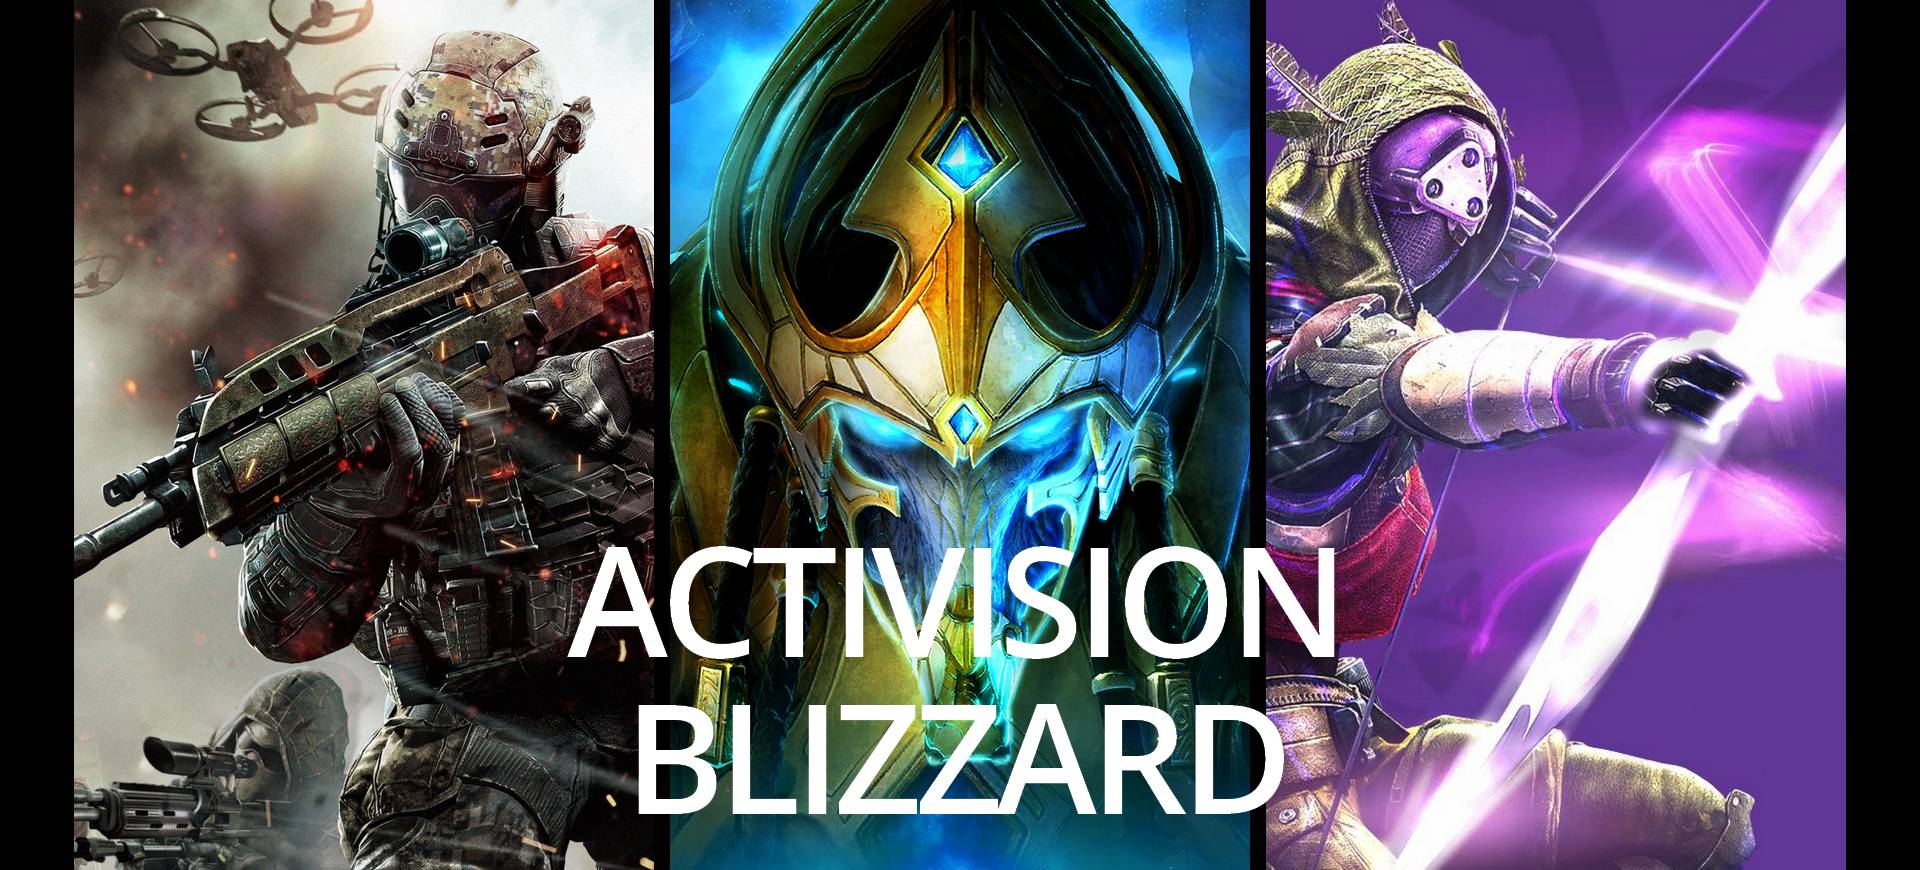 Gamescom 2015: Activision Blizzard - "Song kiếm hợp bích"!